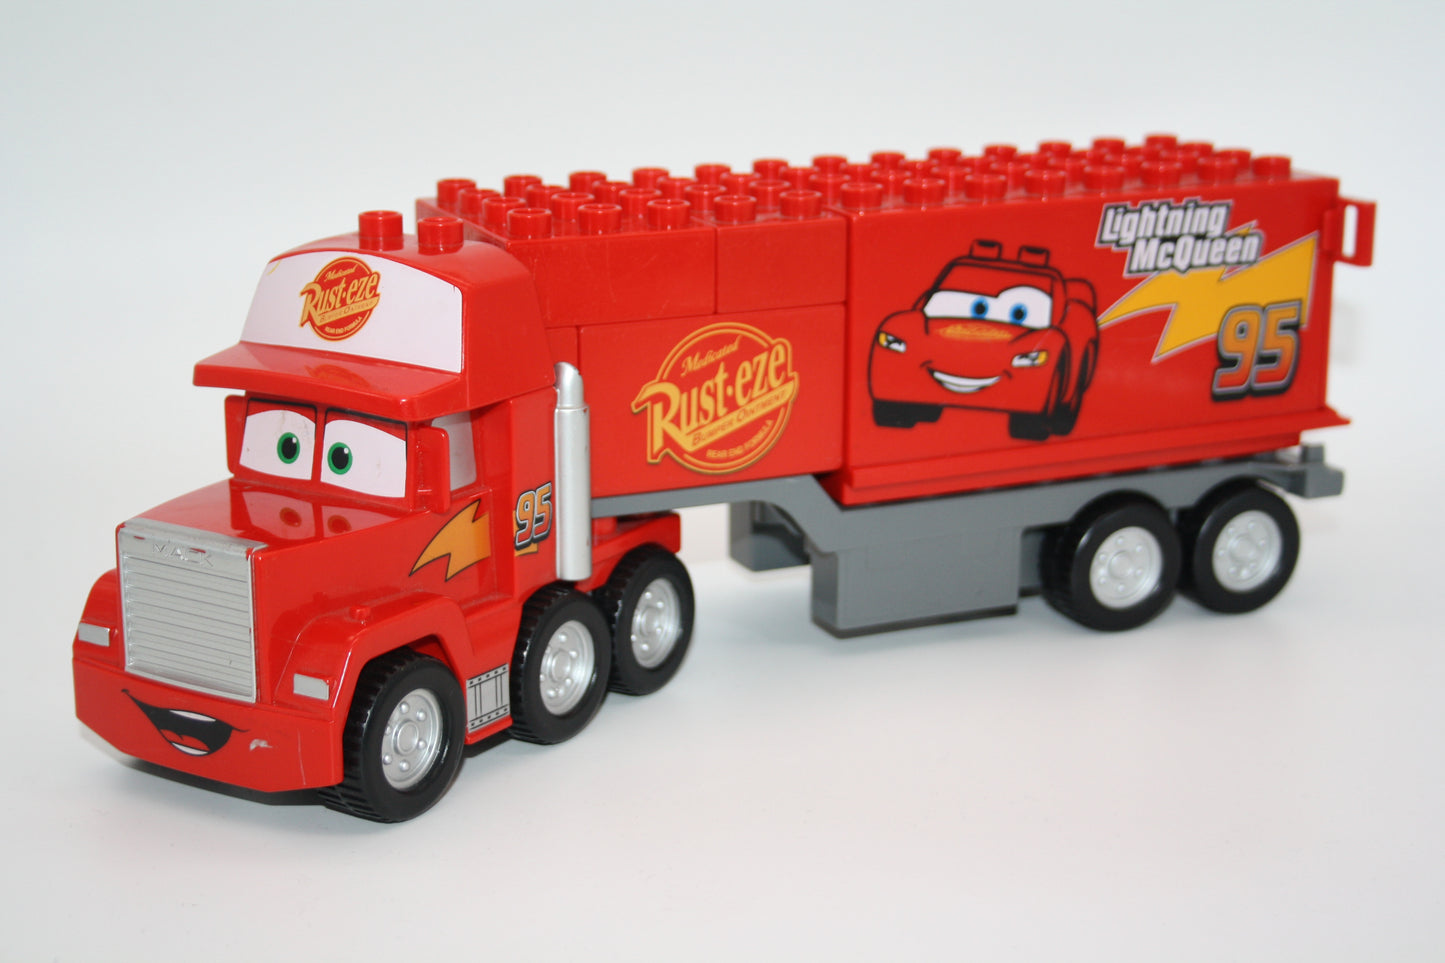 Duplo - Mack m. großem Auflieger - Disney Cars - rot - Lastwagen/LKW - Fahrzeuge